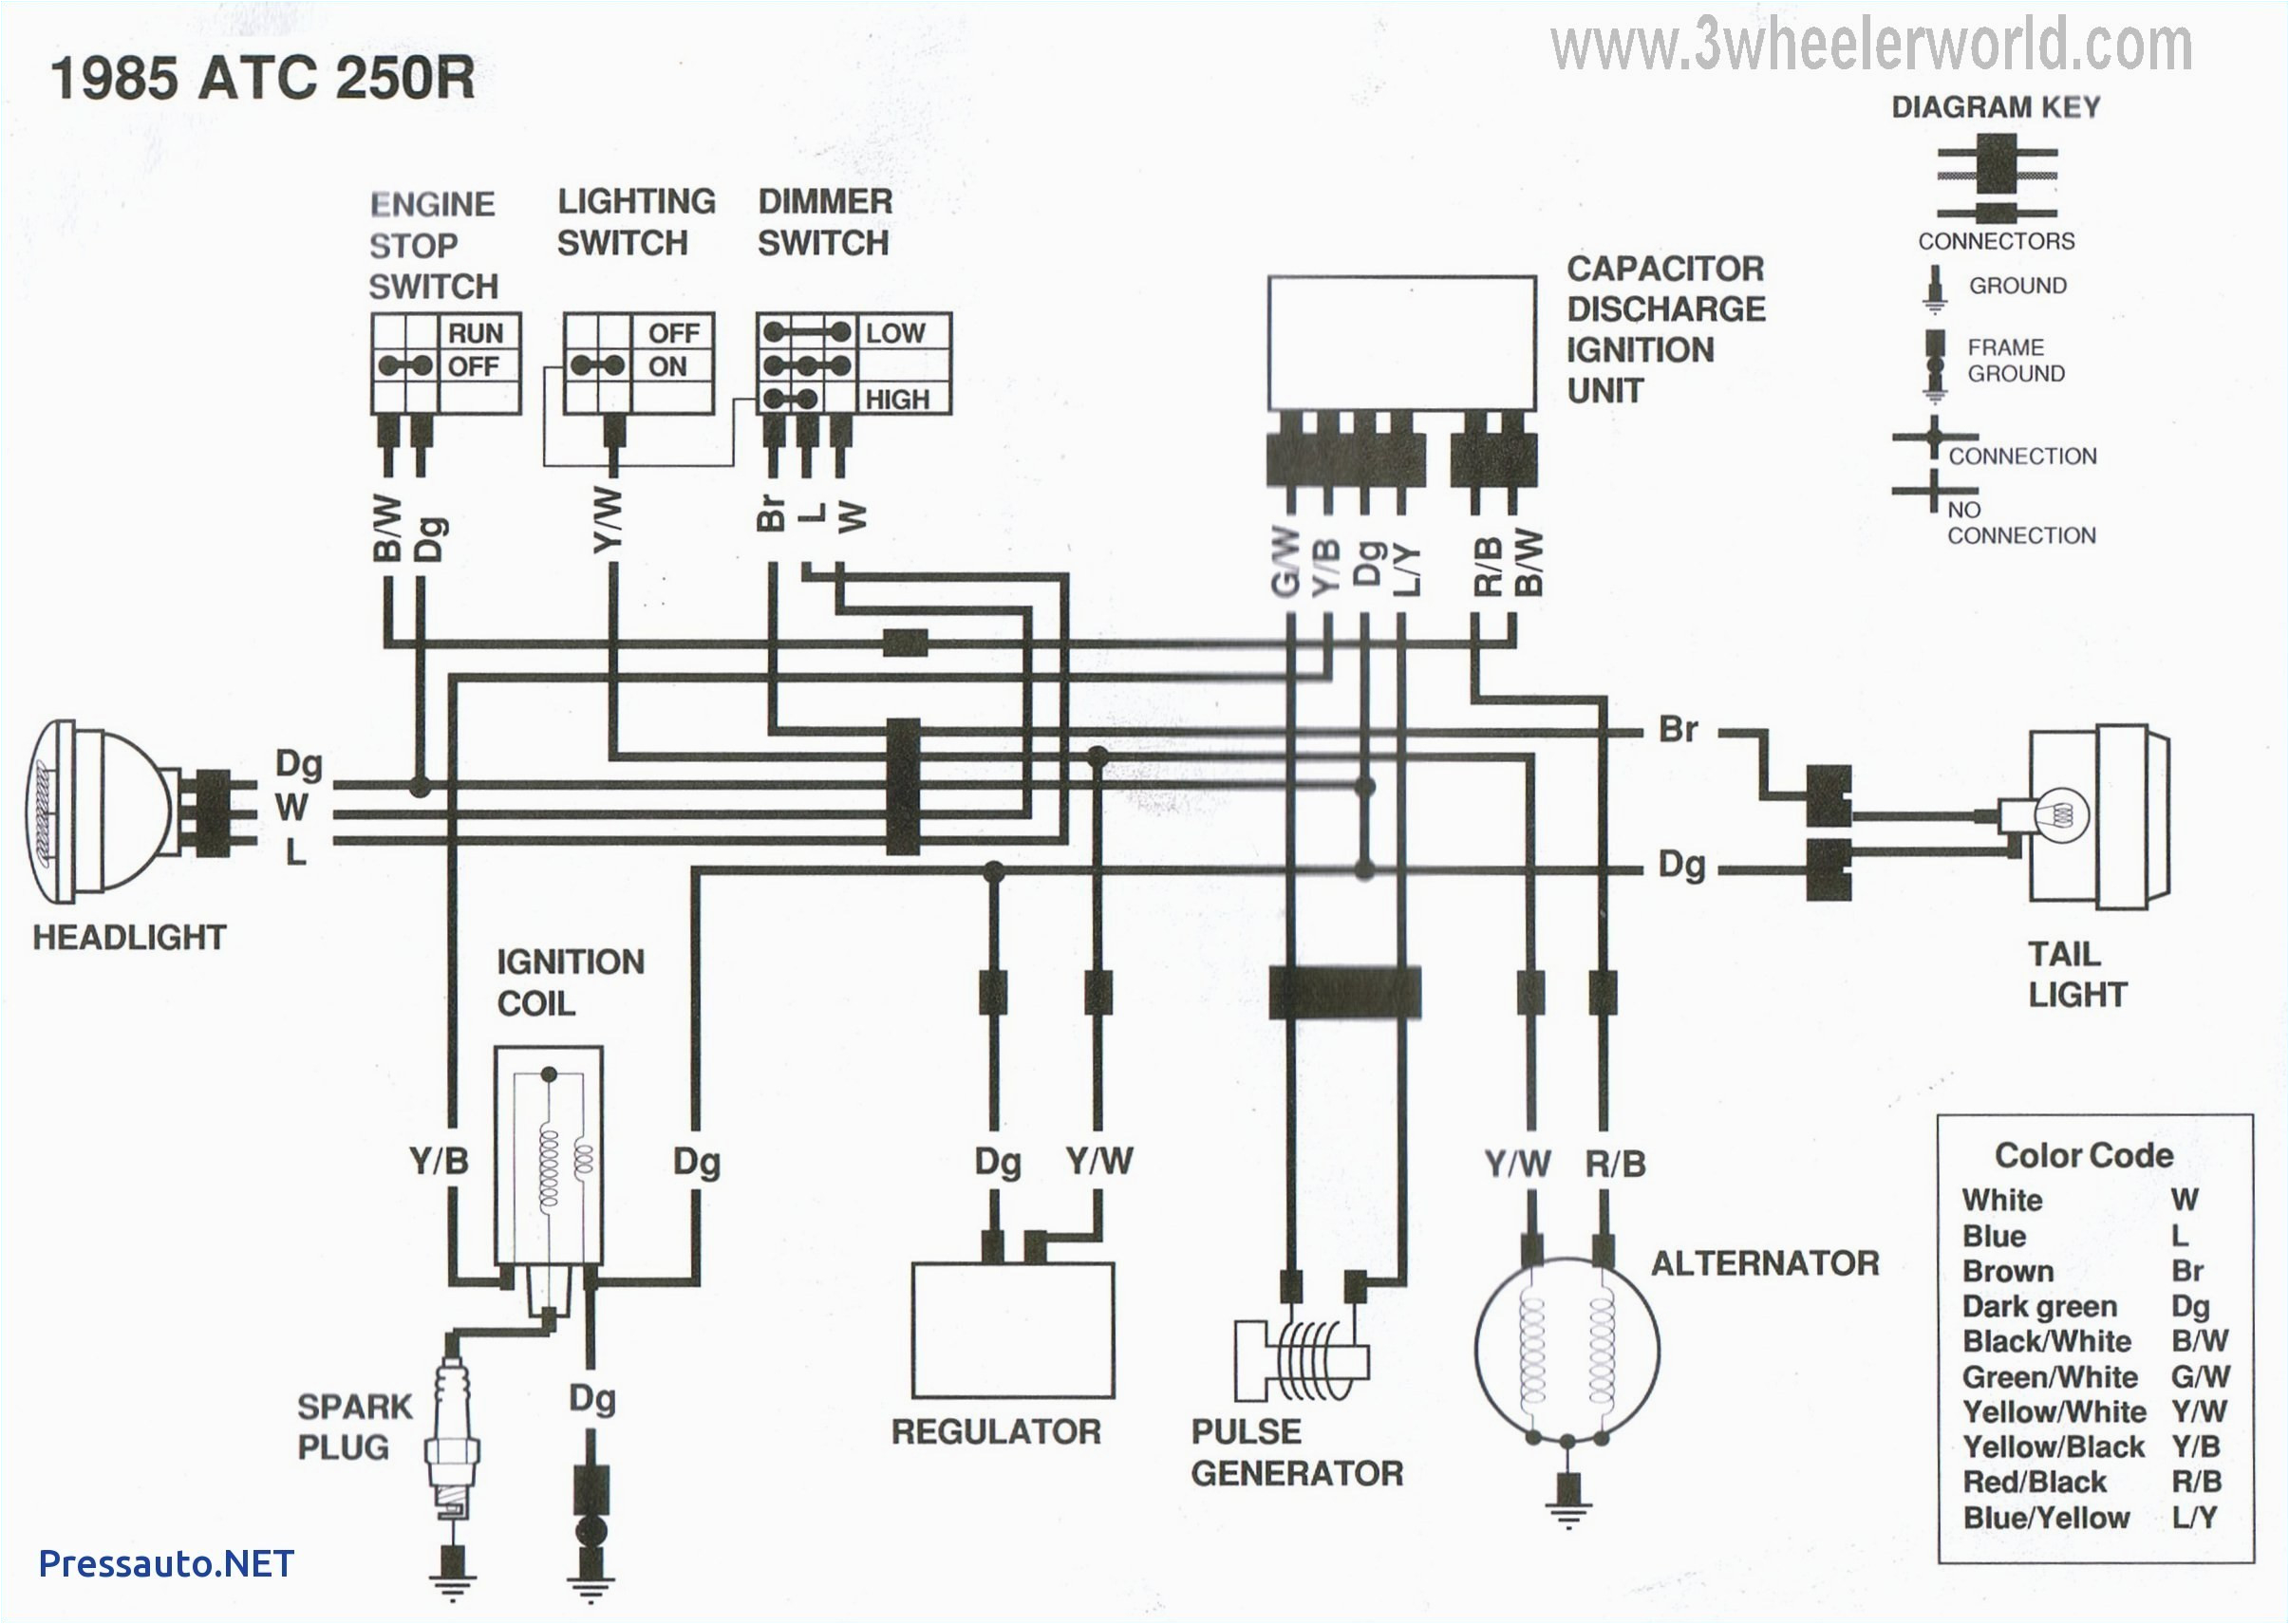 honda 660 wire diagram wiring diagram blog honda 660 wire diagram